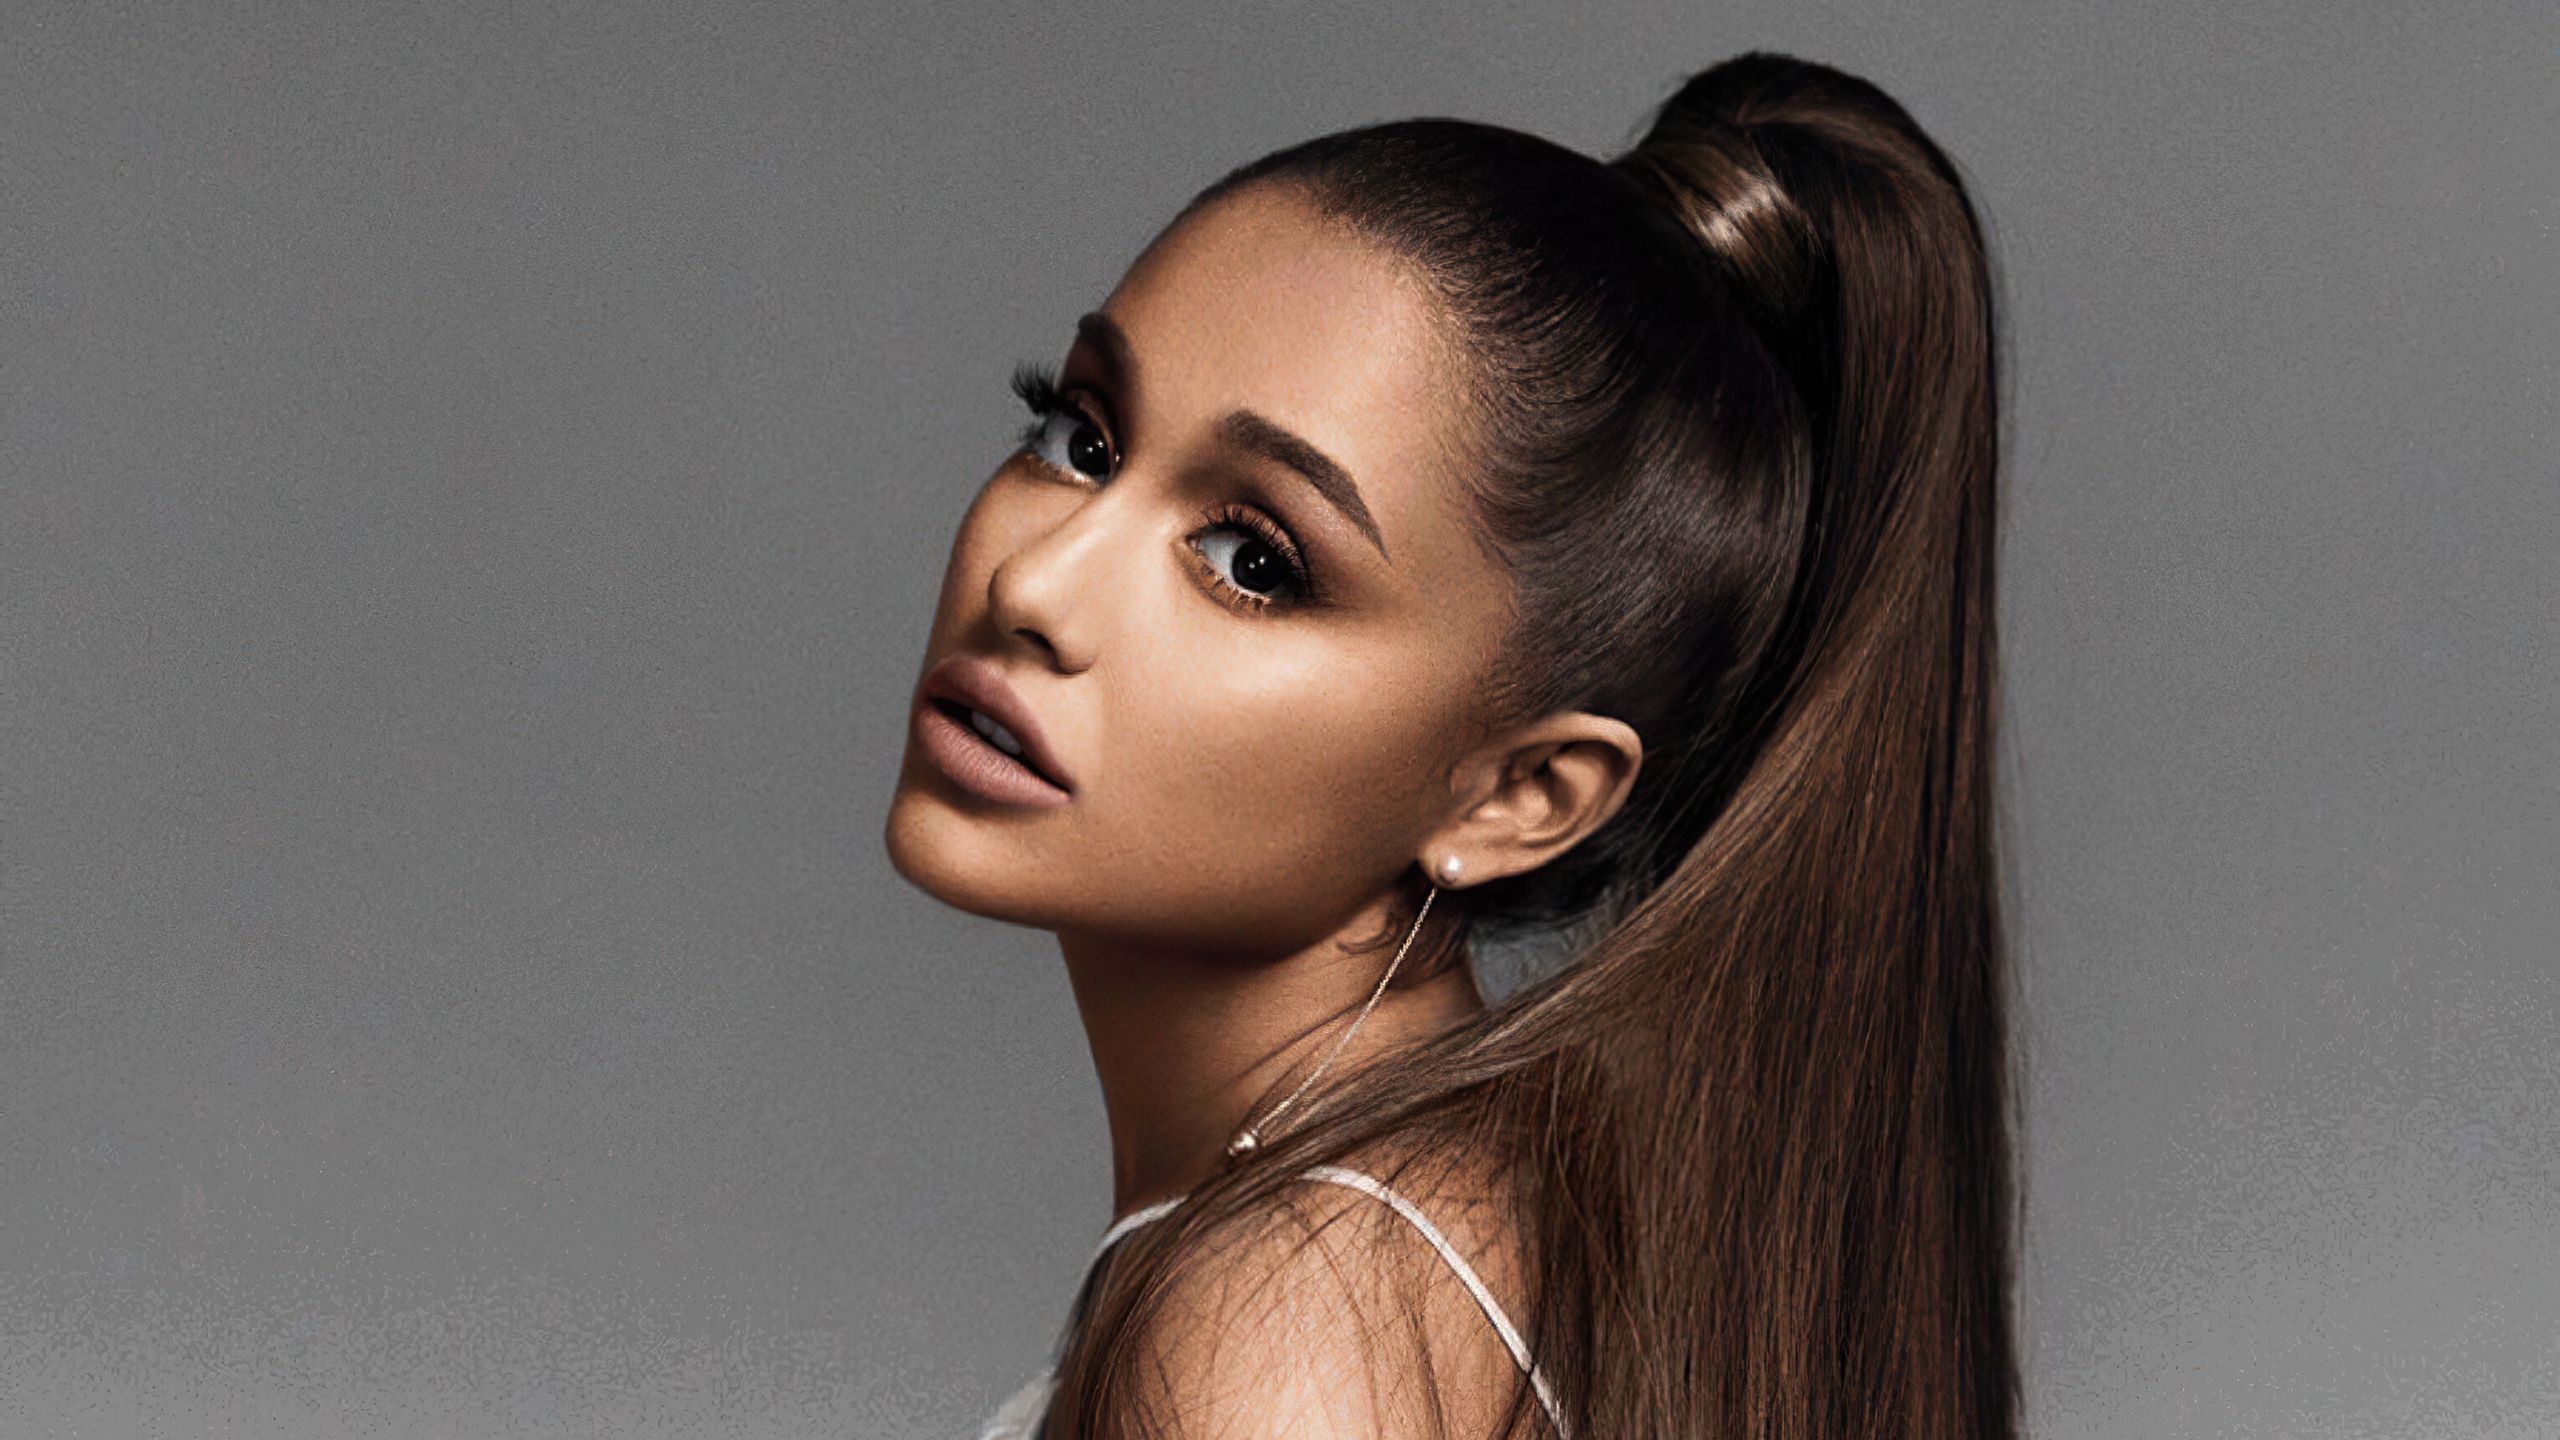 Ariana Grande 2020, HD Celebrities, 4k Wallpapers, Image, Backgrounds, Phot...